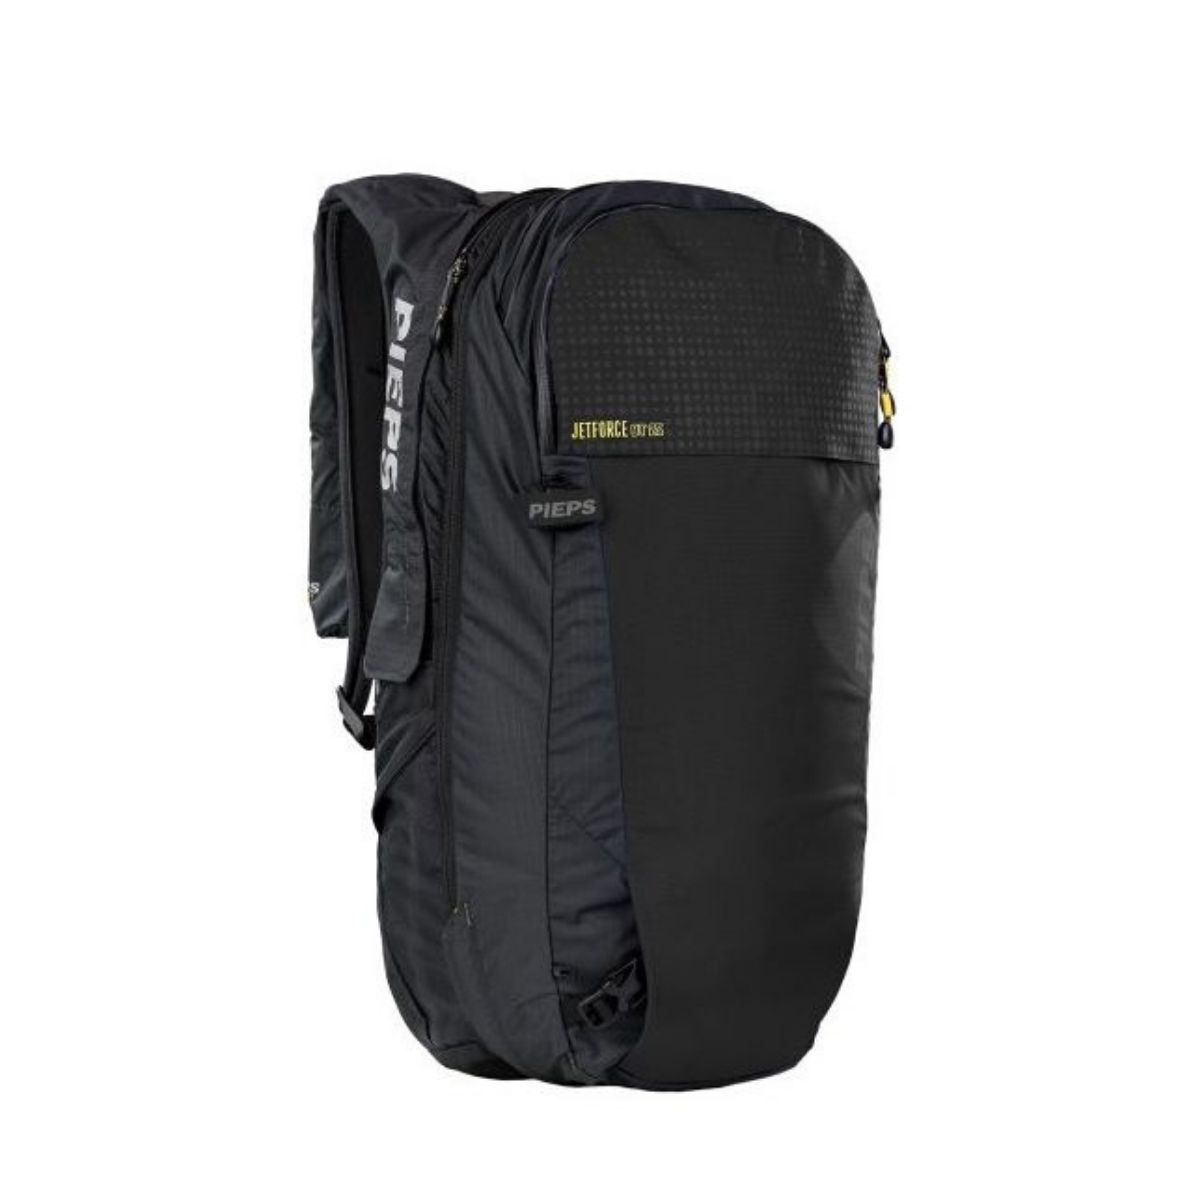 Pieps Jetforce Bt Pack 25 - Avalanche backpack